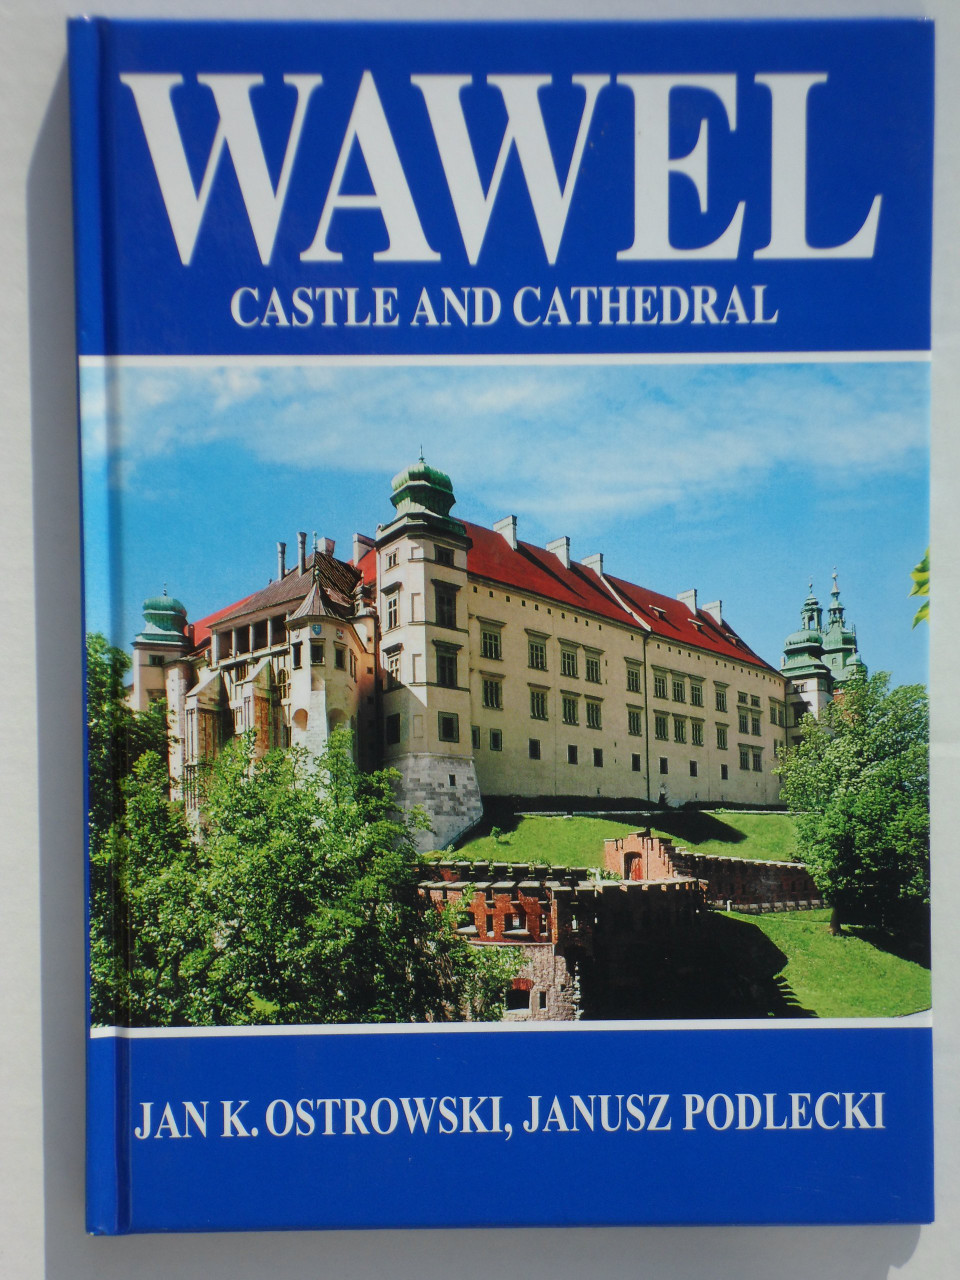 Jan K. Ostrowski, Janusz Podlecki / Wawel Castle and Cathedral - A History and Guide(Hardback) ( Kraków )